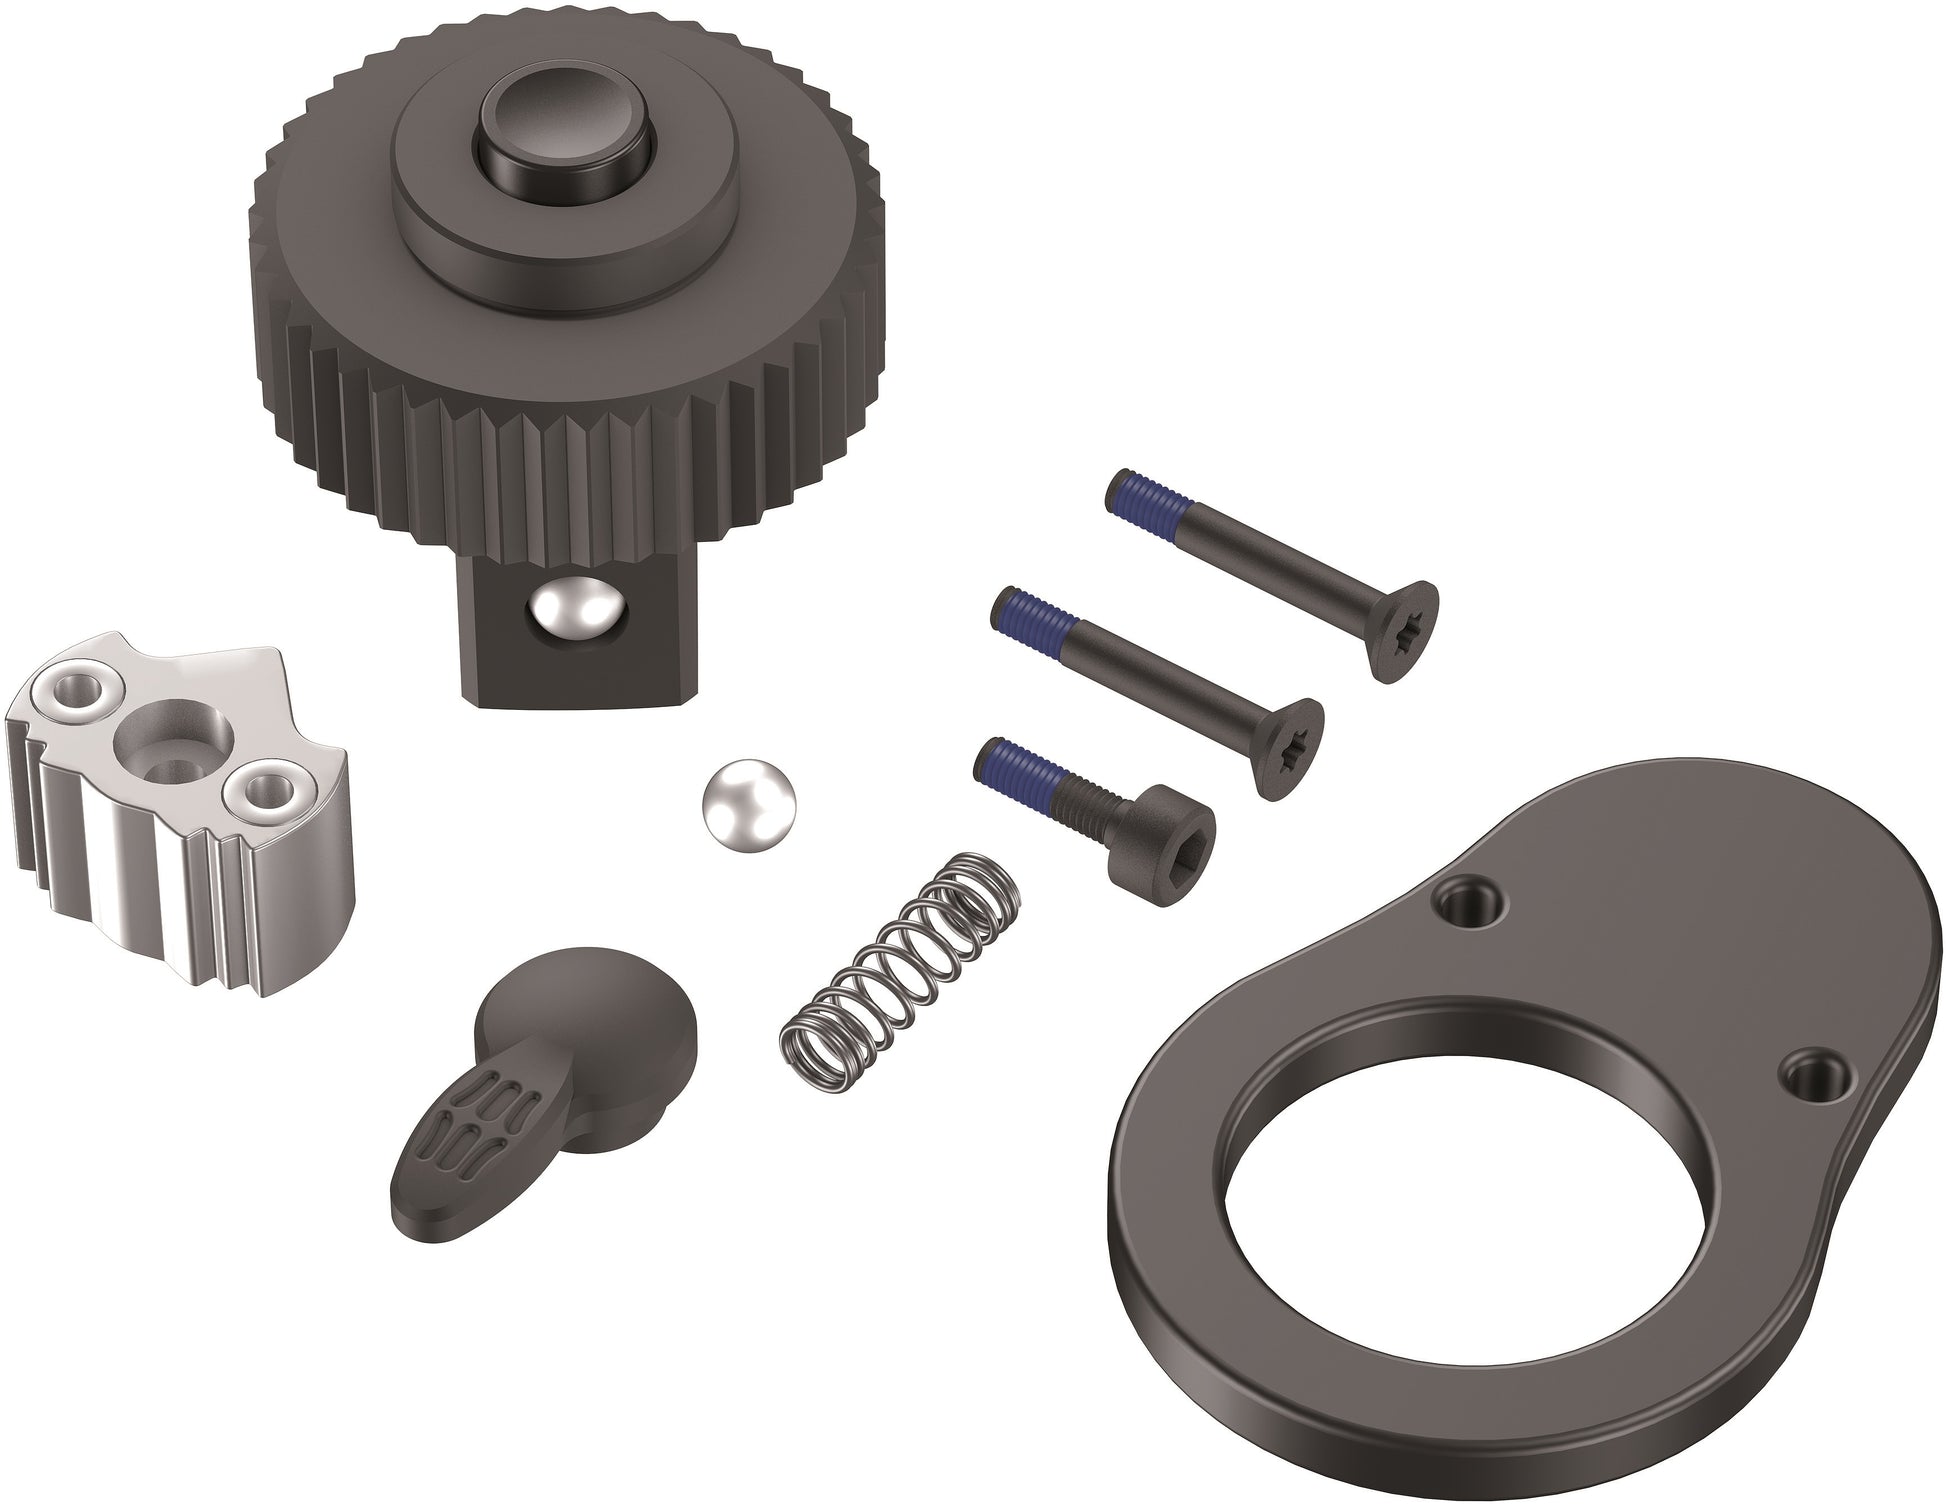 wera 9907 c 4 click torque ratchet wrench repair kit 1/2" 05547634001